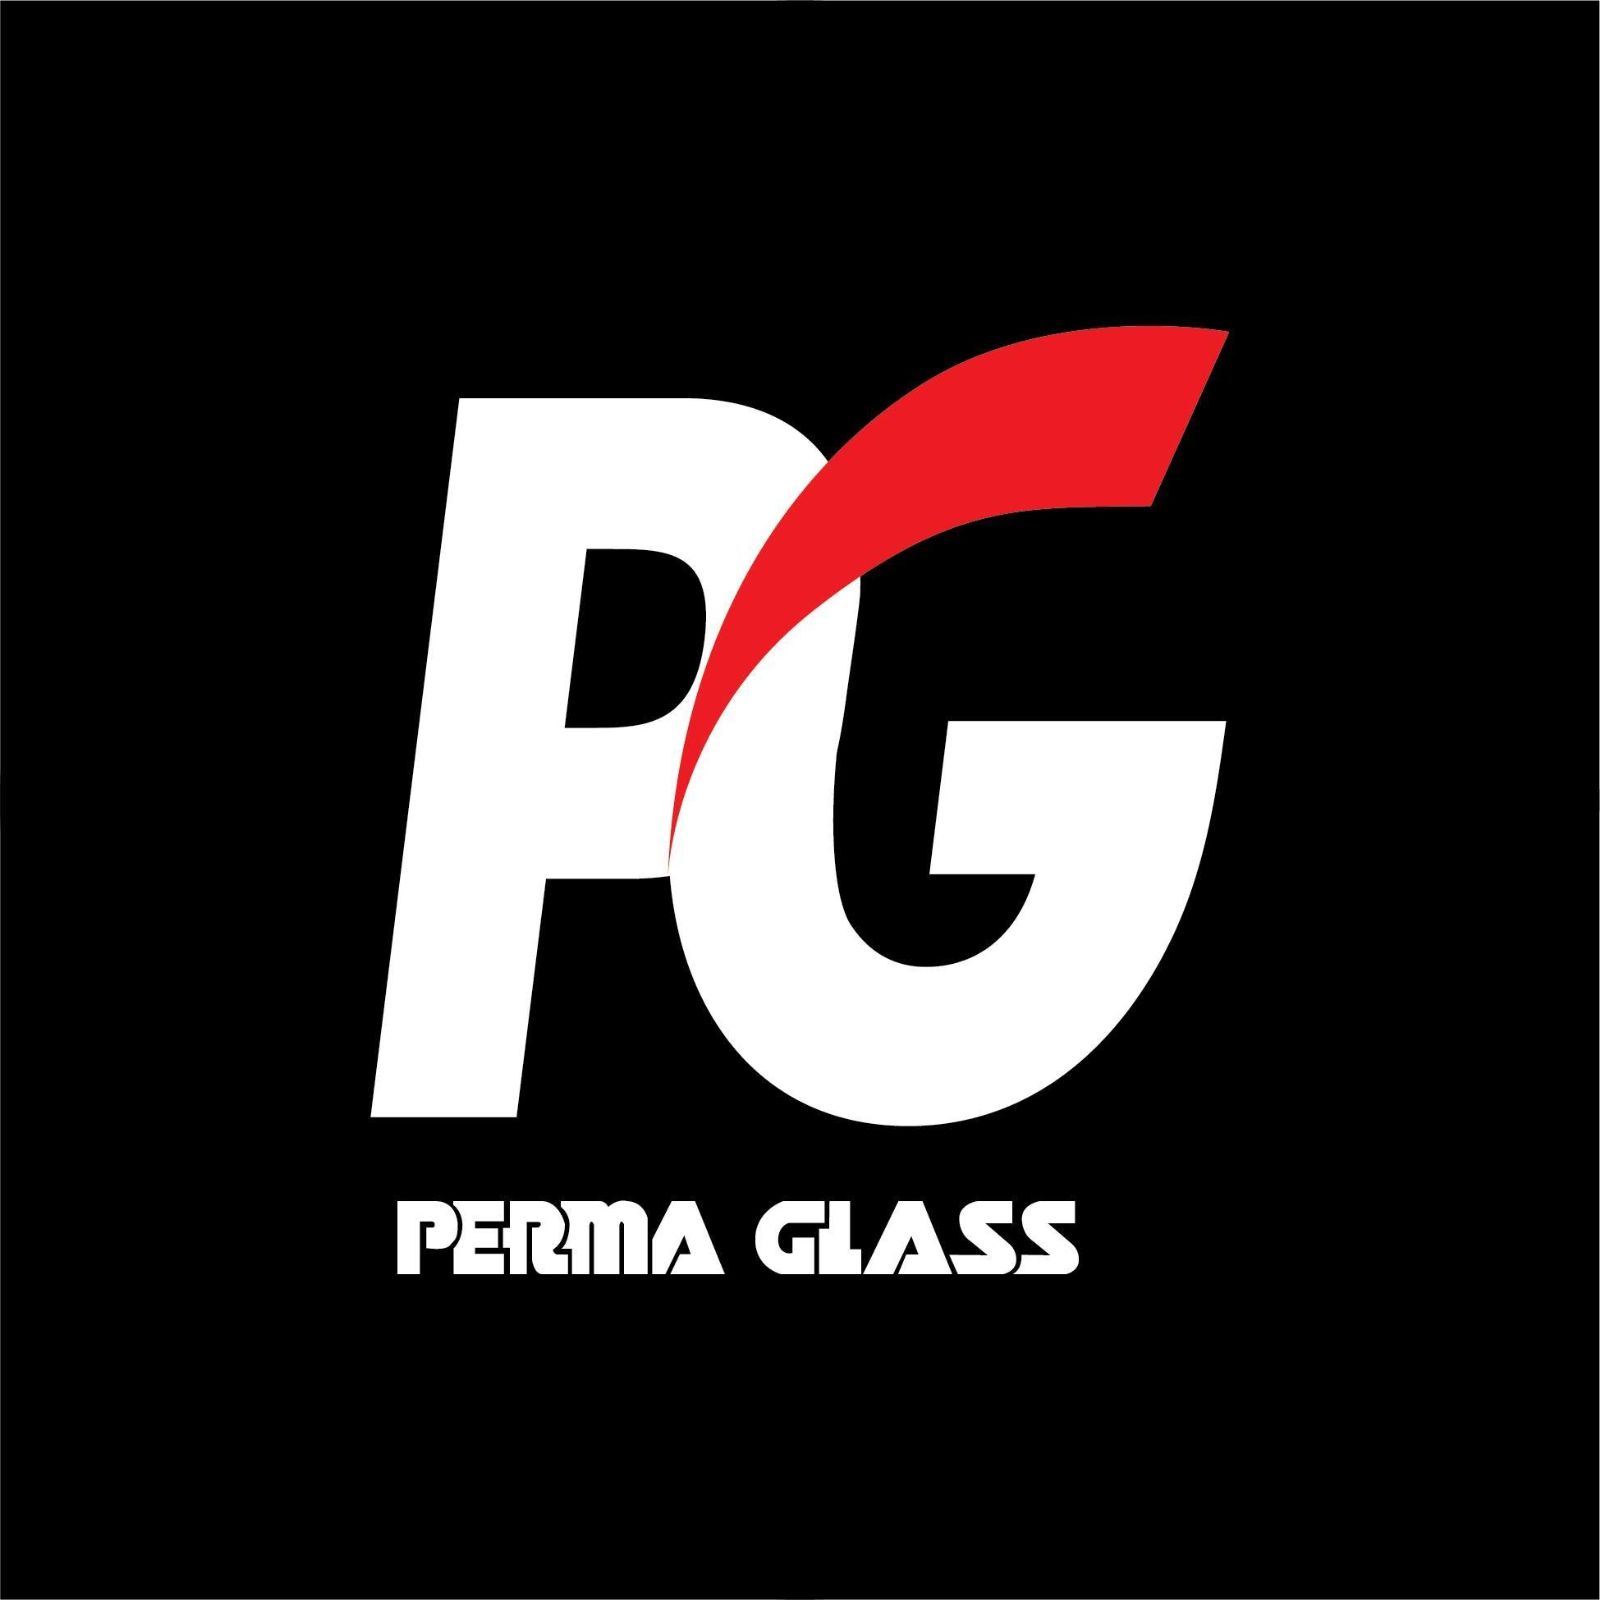 PERMA GLASS (PG)